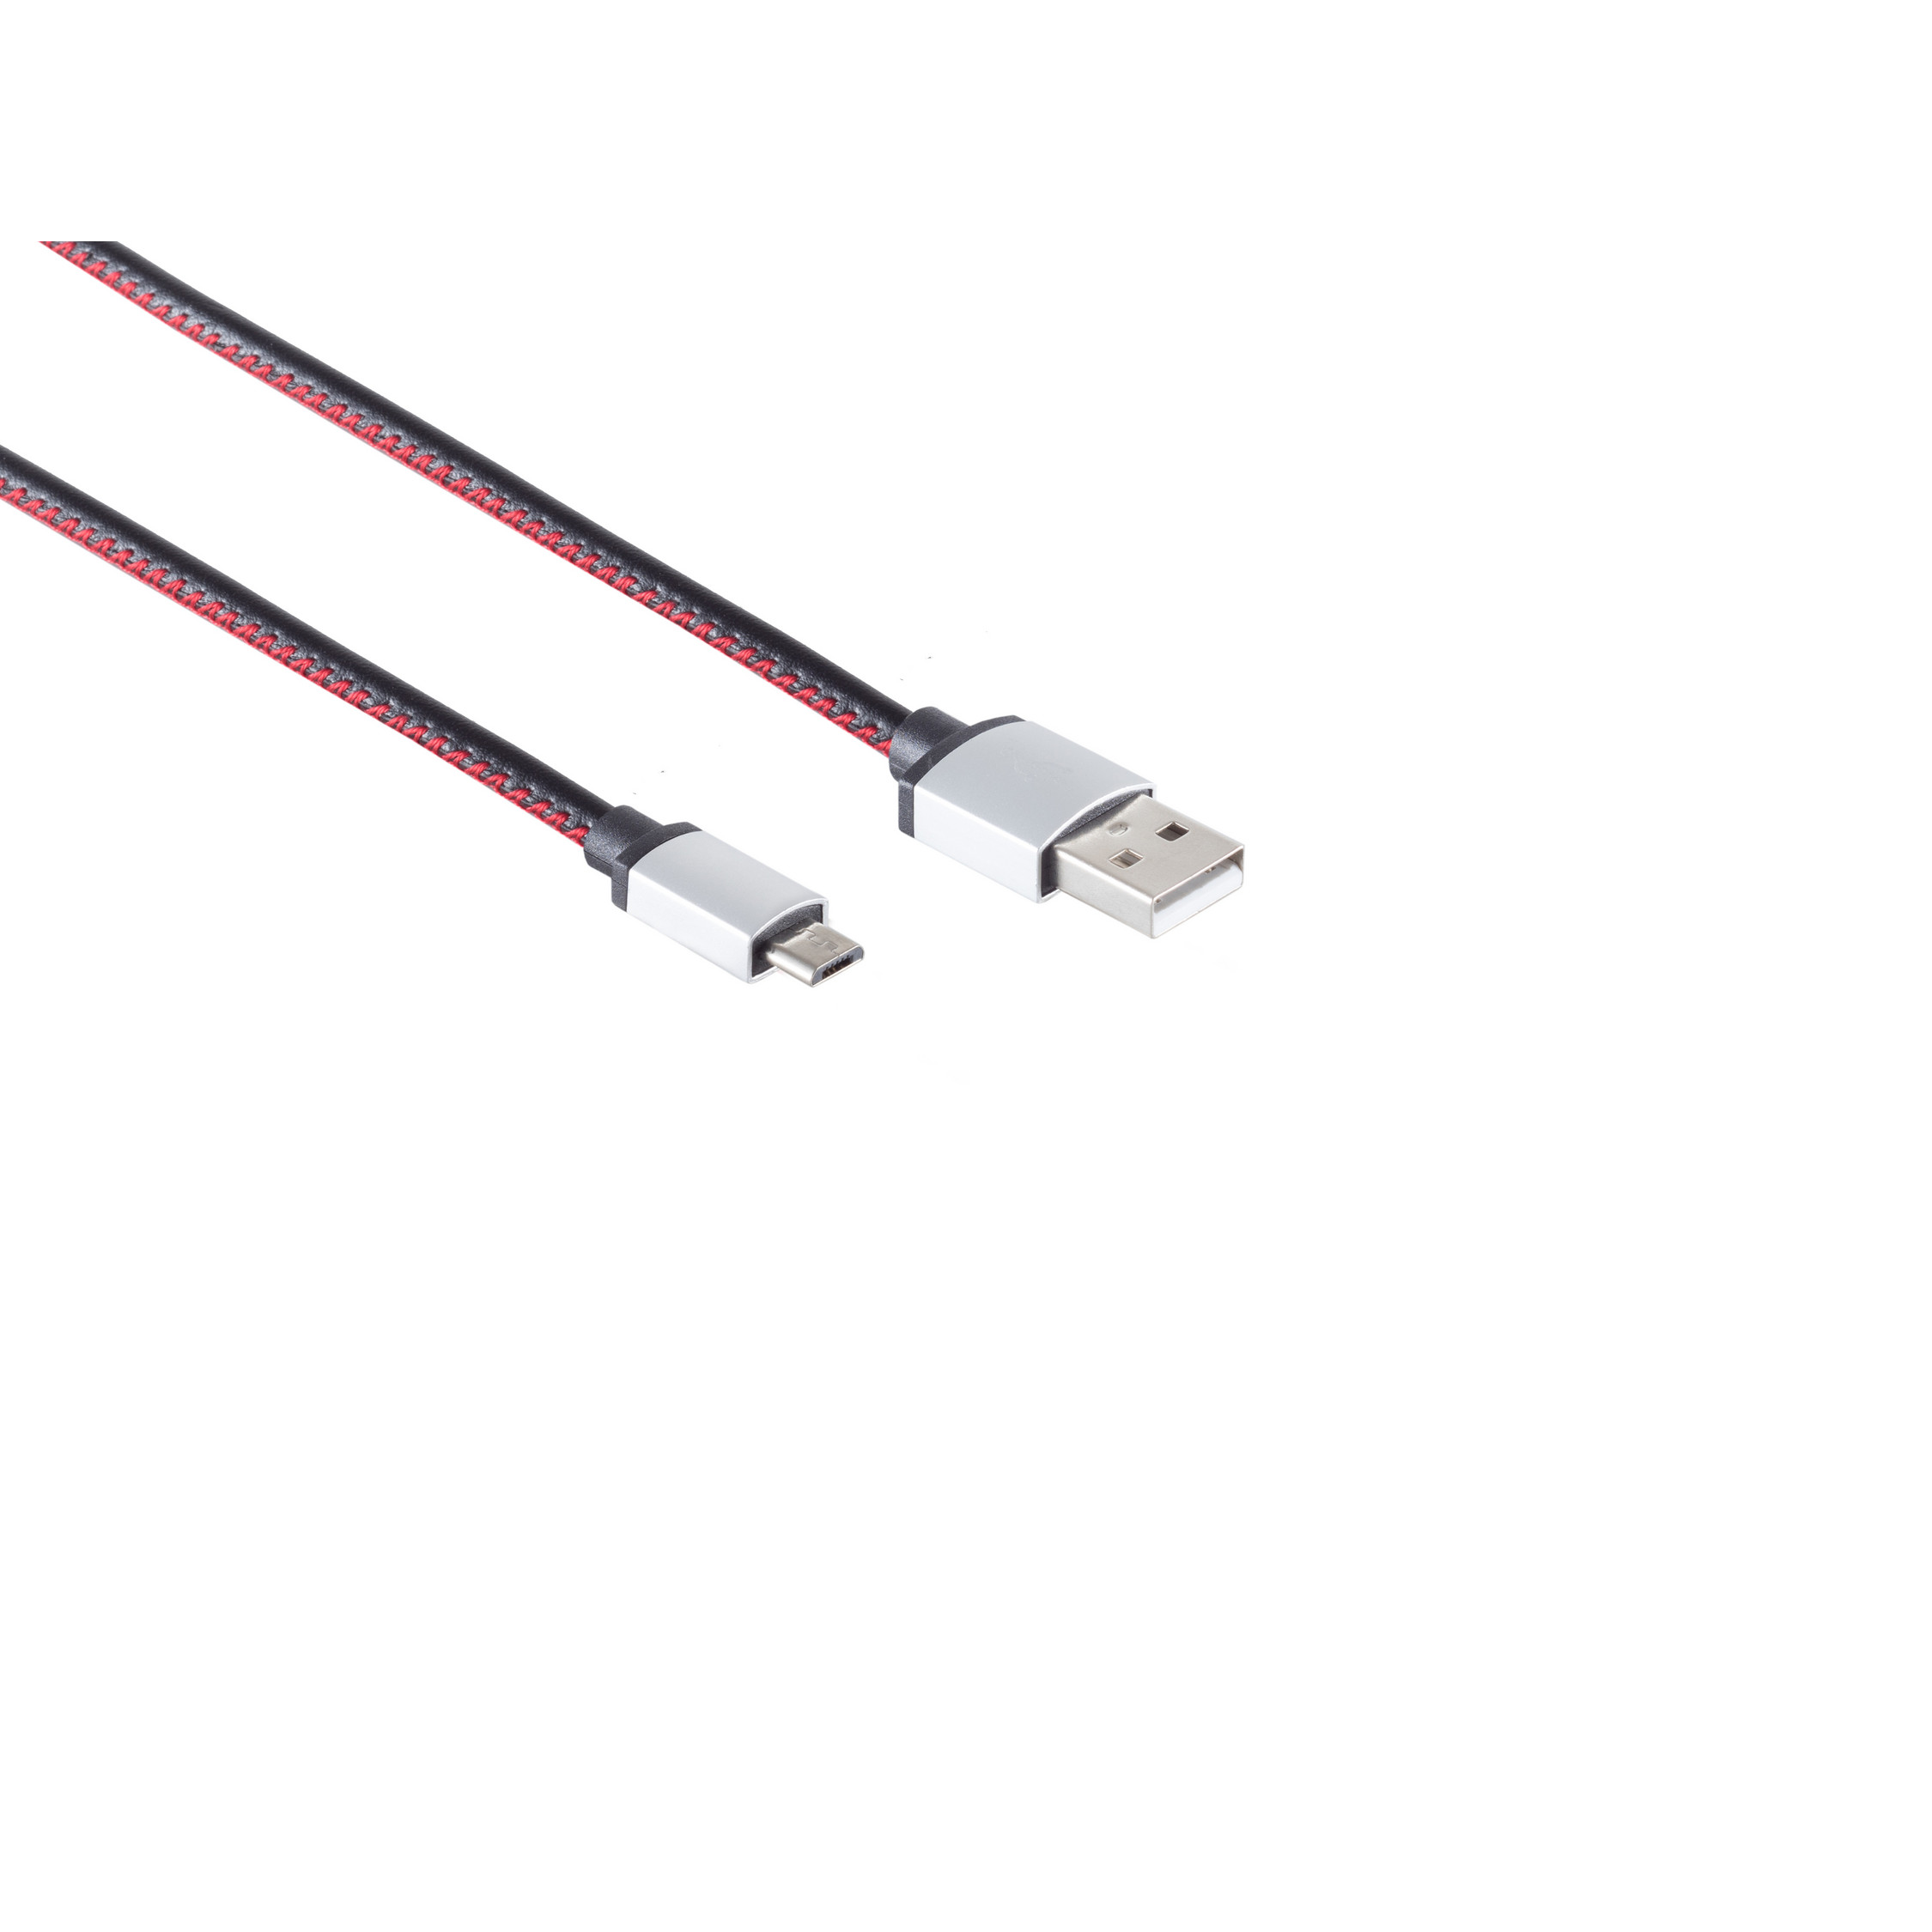 KABELBUDE USB-Ladekabel A Stecker auf Kabel B USB USB Micro schwarz 2m